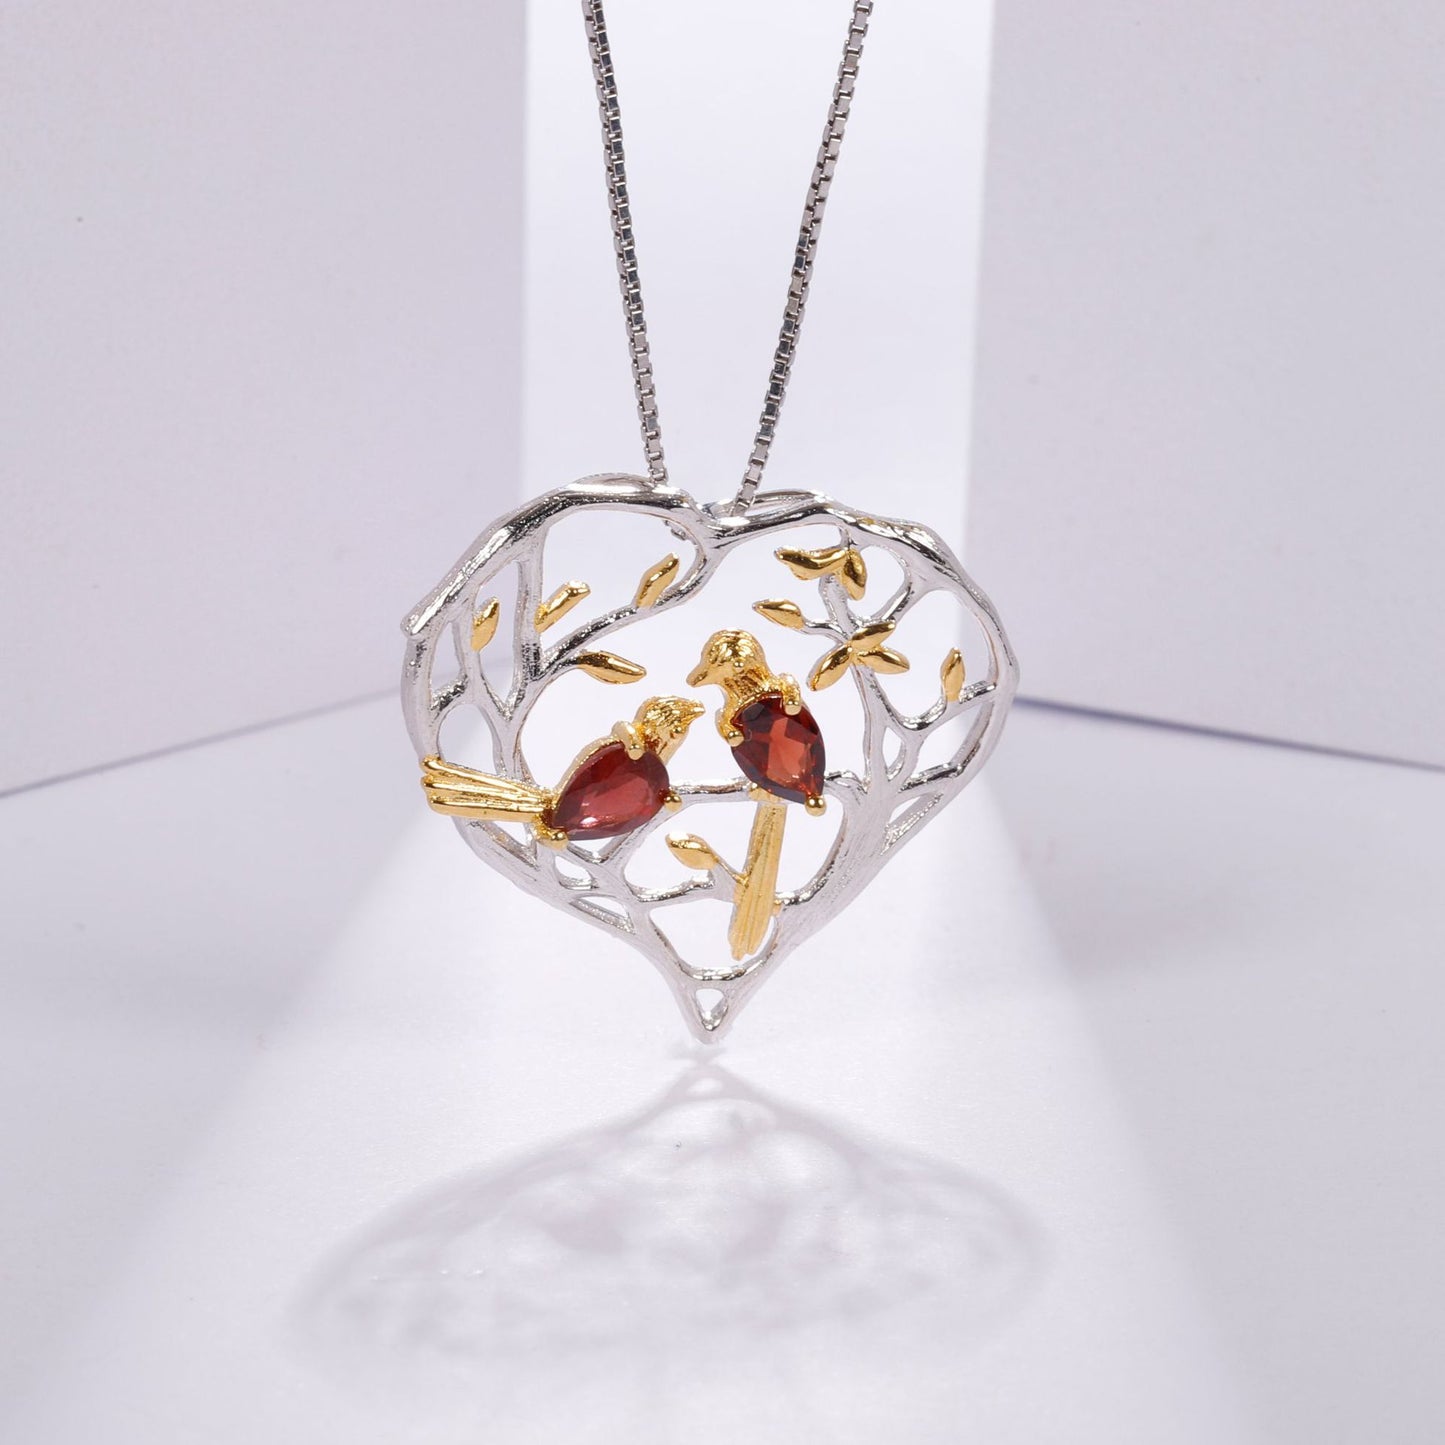 Premium Design Natural Colourful Gemstone Flower Bird Element Pendant Silver Necklace for Women